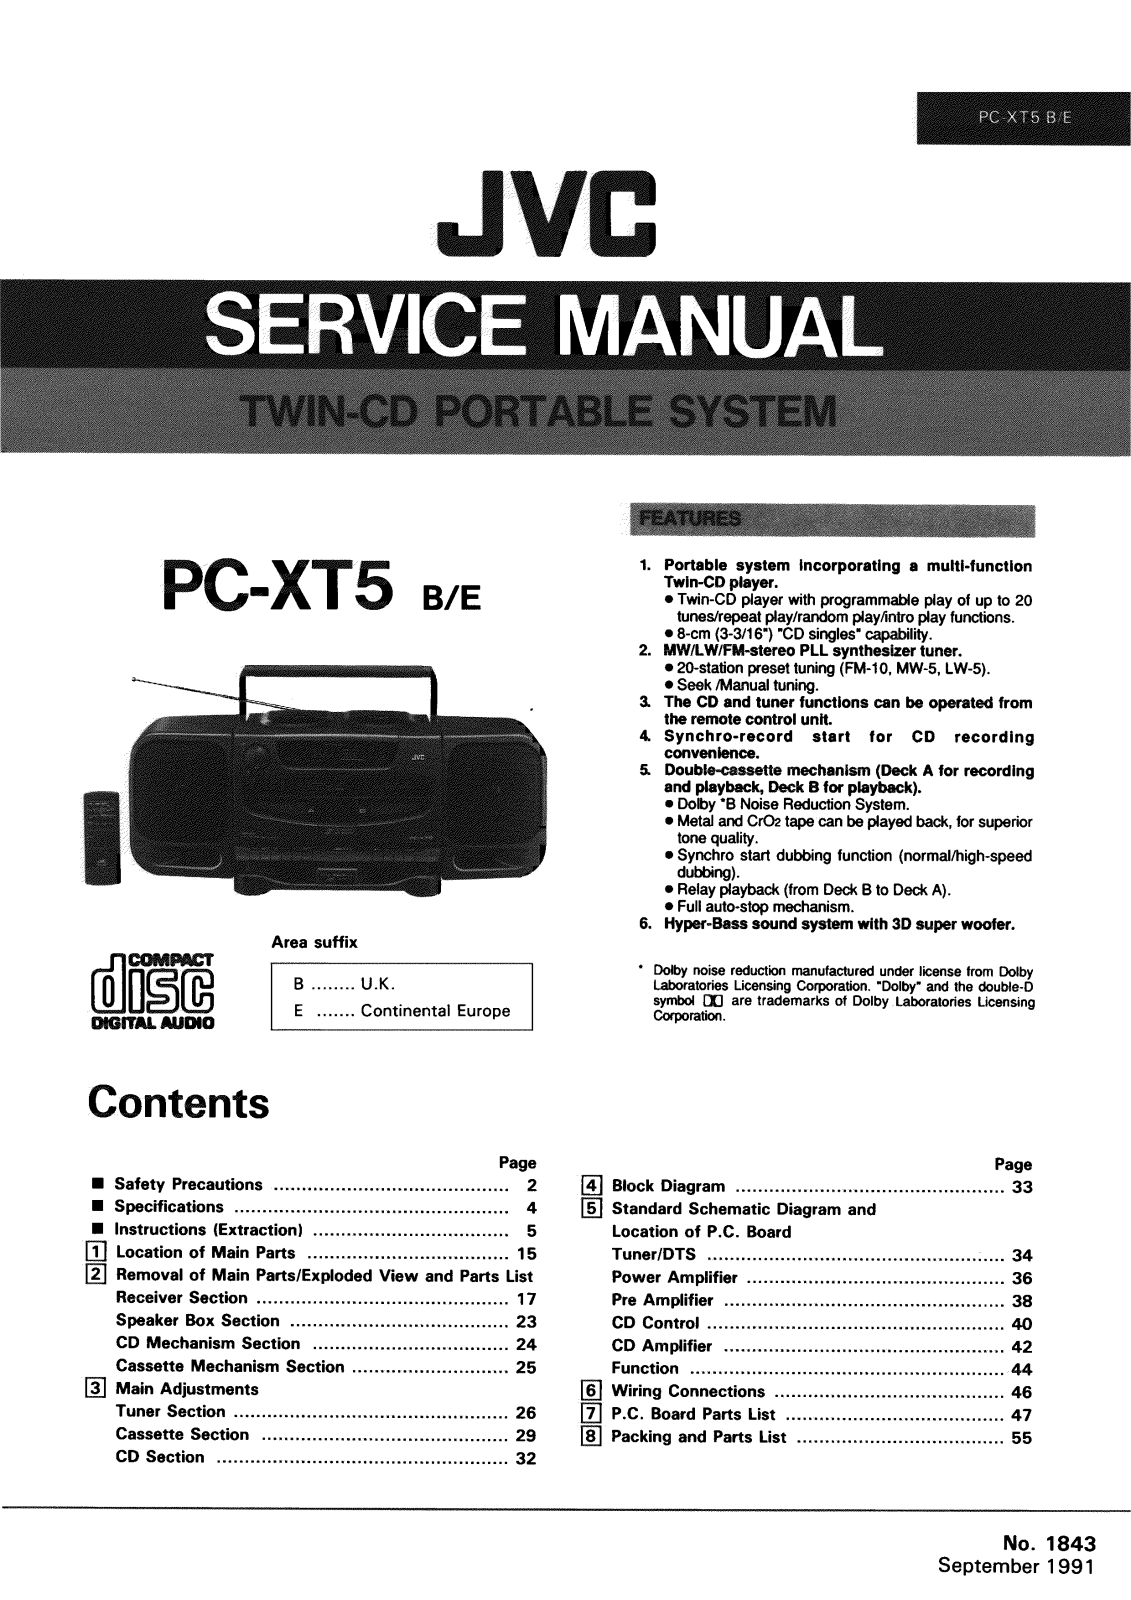 Jvc PC-XT5 Service Manual